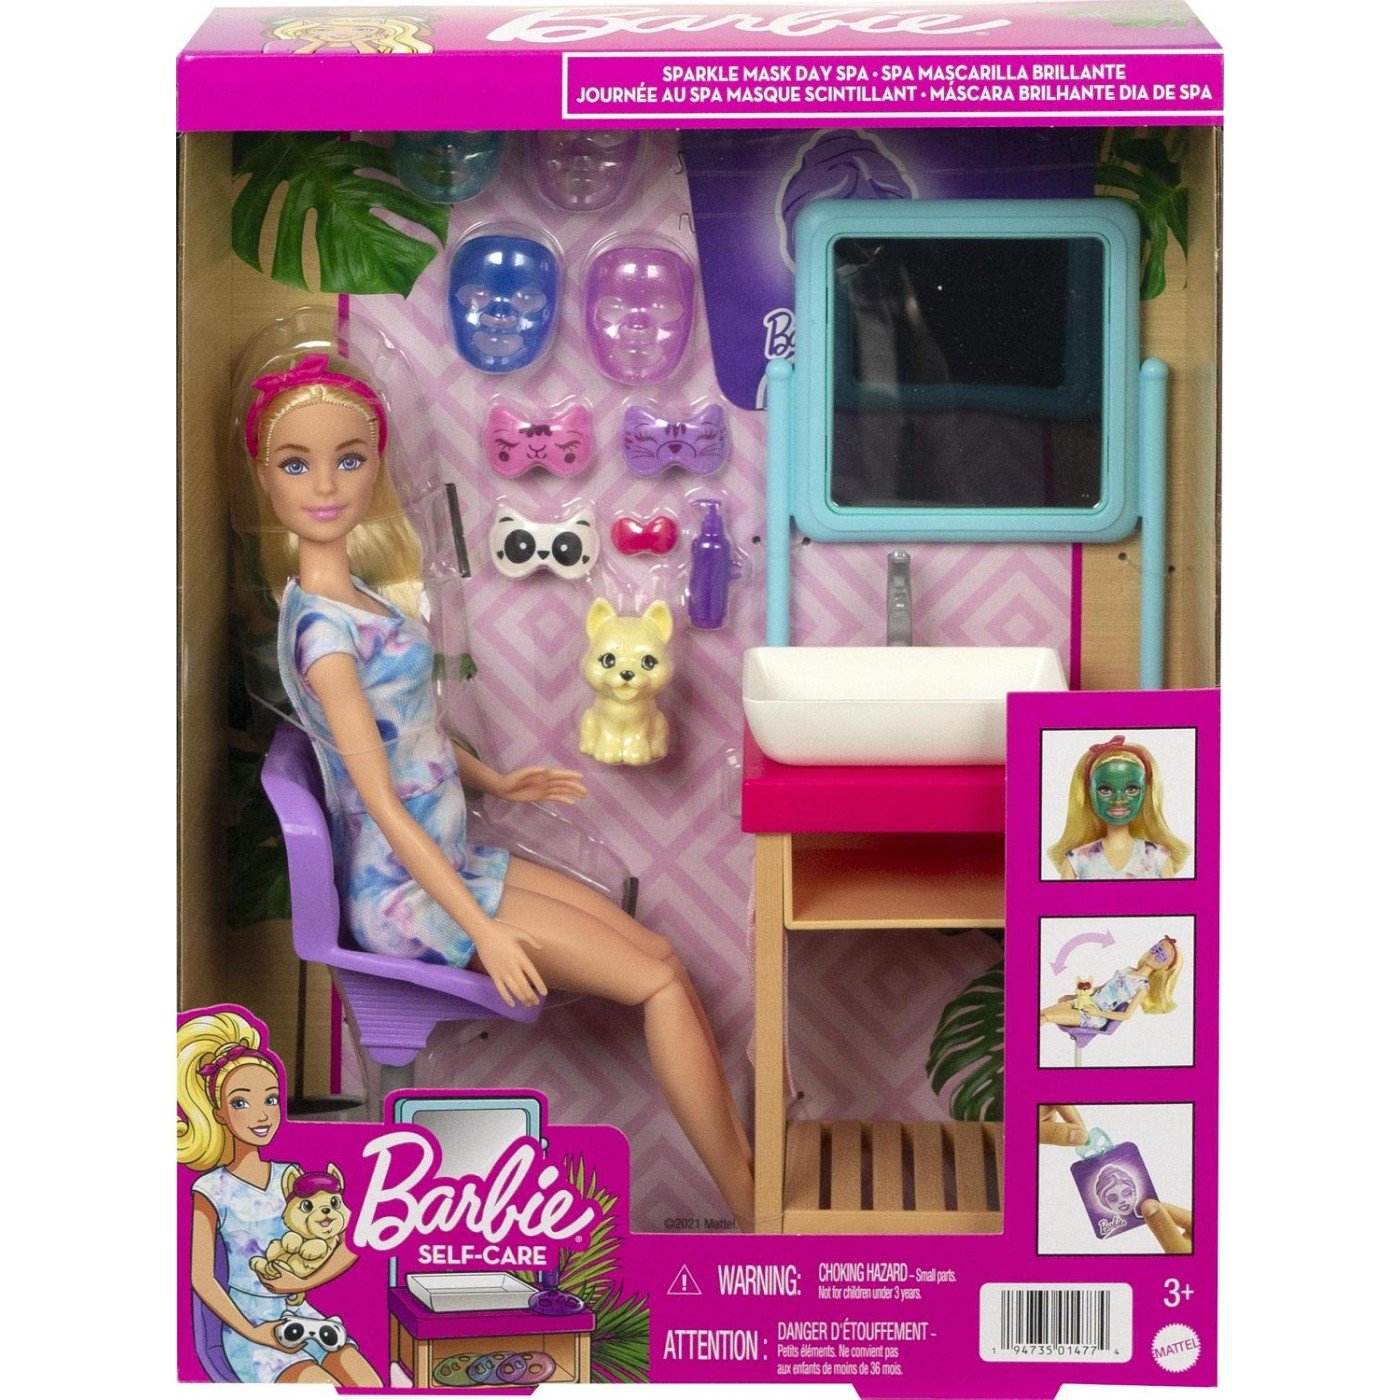 Mattel Barbie Wellness Spa (Hcm82)